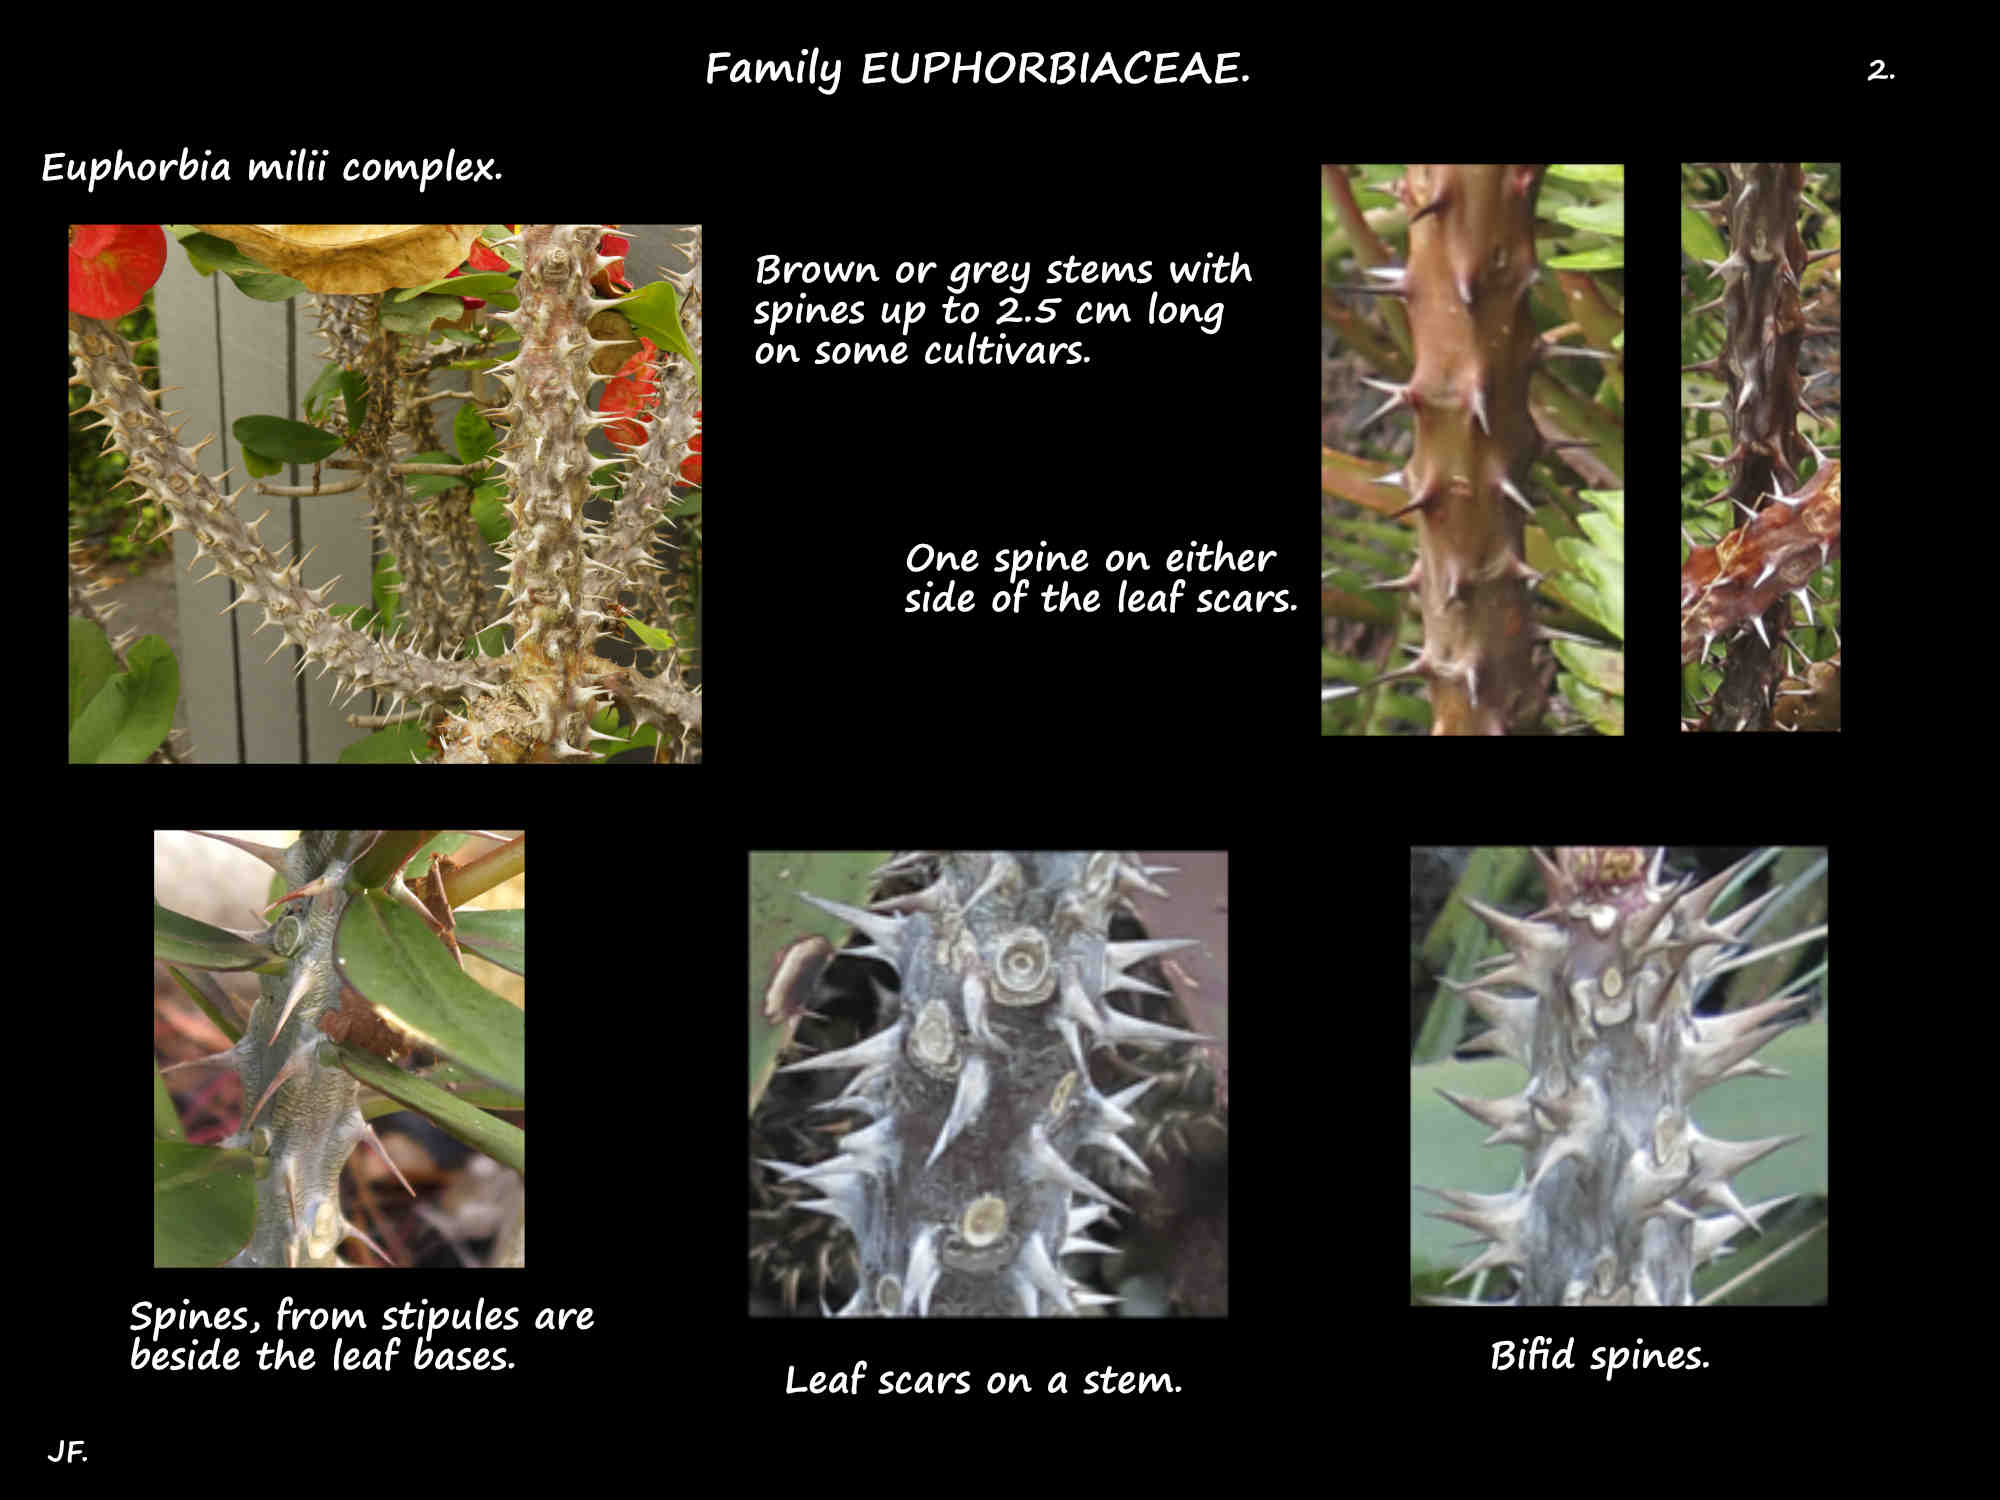 2 Spines on Euphorbia milii stems